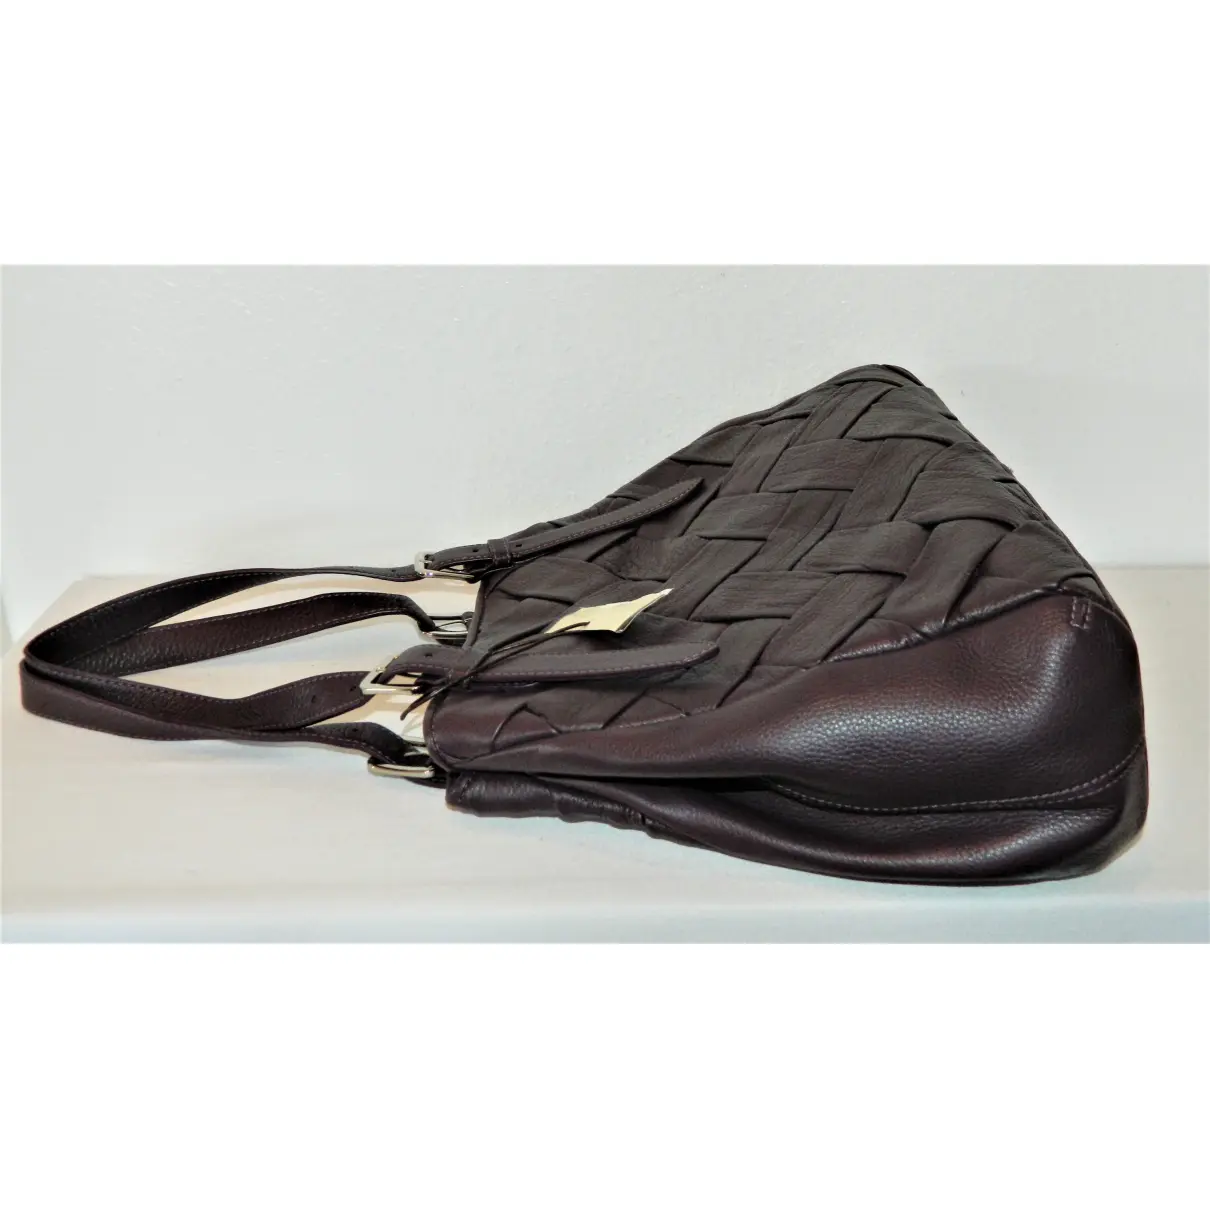 Leather handbag Cole Haan